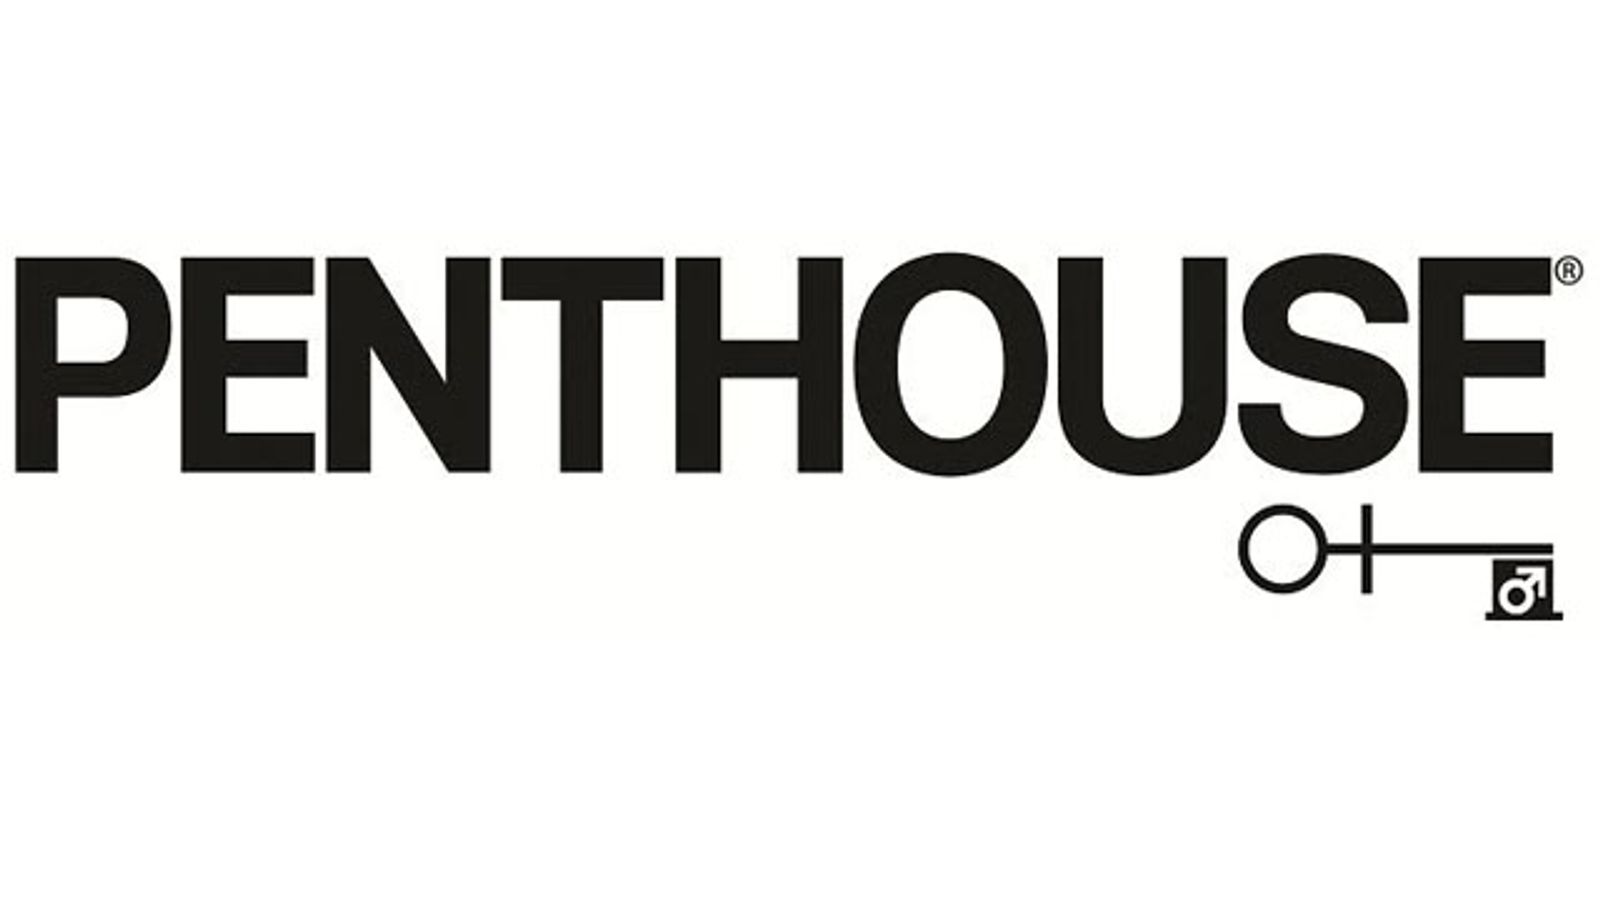 Penthouse Magazine Announces Plans For Magazine To Go Digital